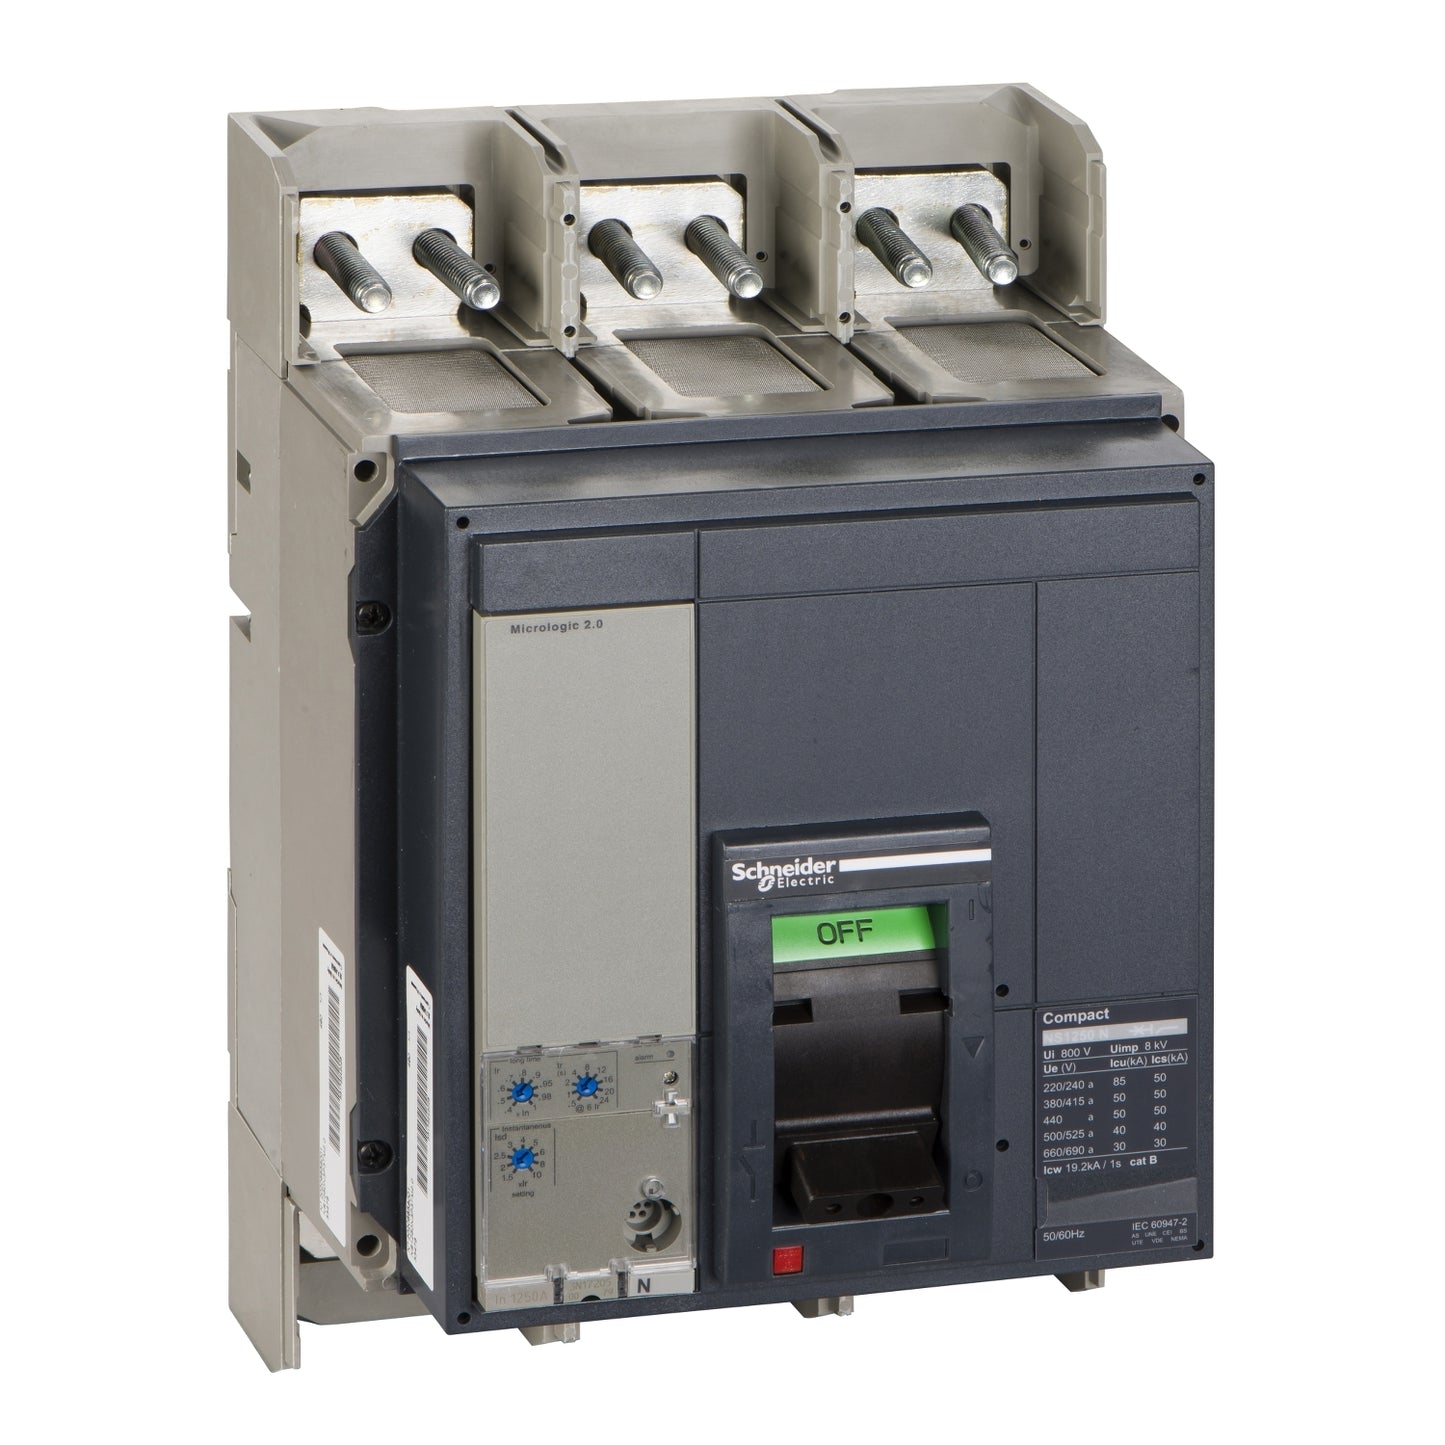 Compact NS - NS1250N - Micrologic 2.0 - 1250A - 50kA 380/415VAC (IEC60947-2) - 33478 - SCHNEIDER